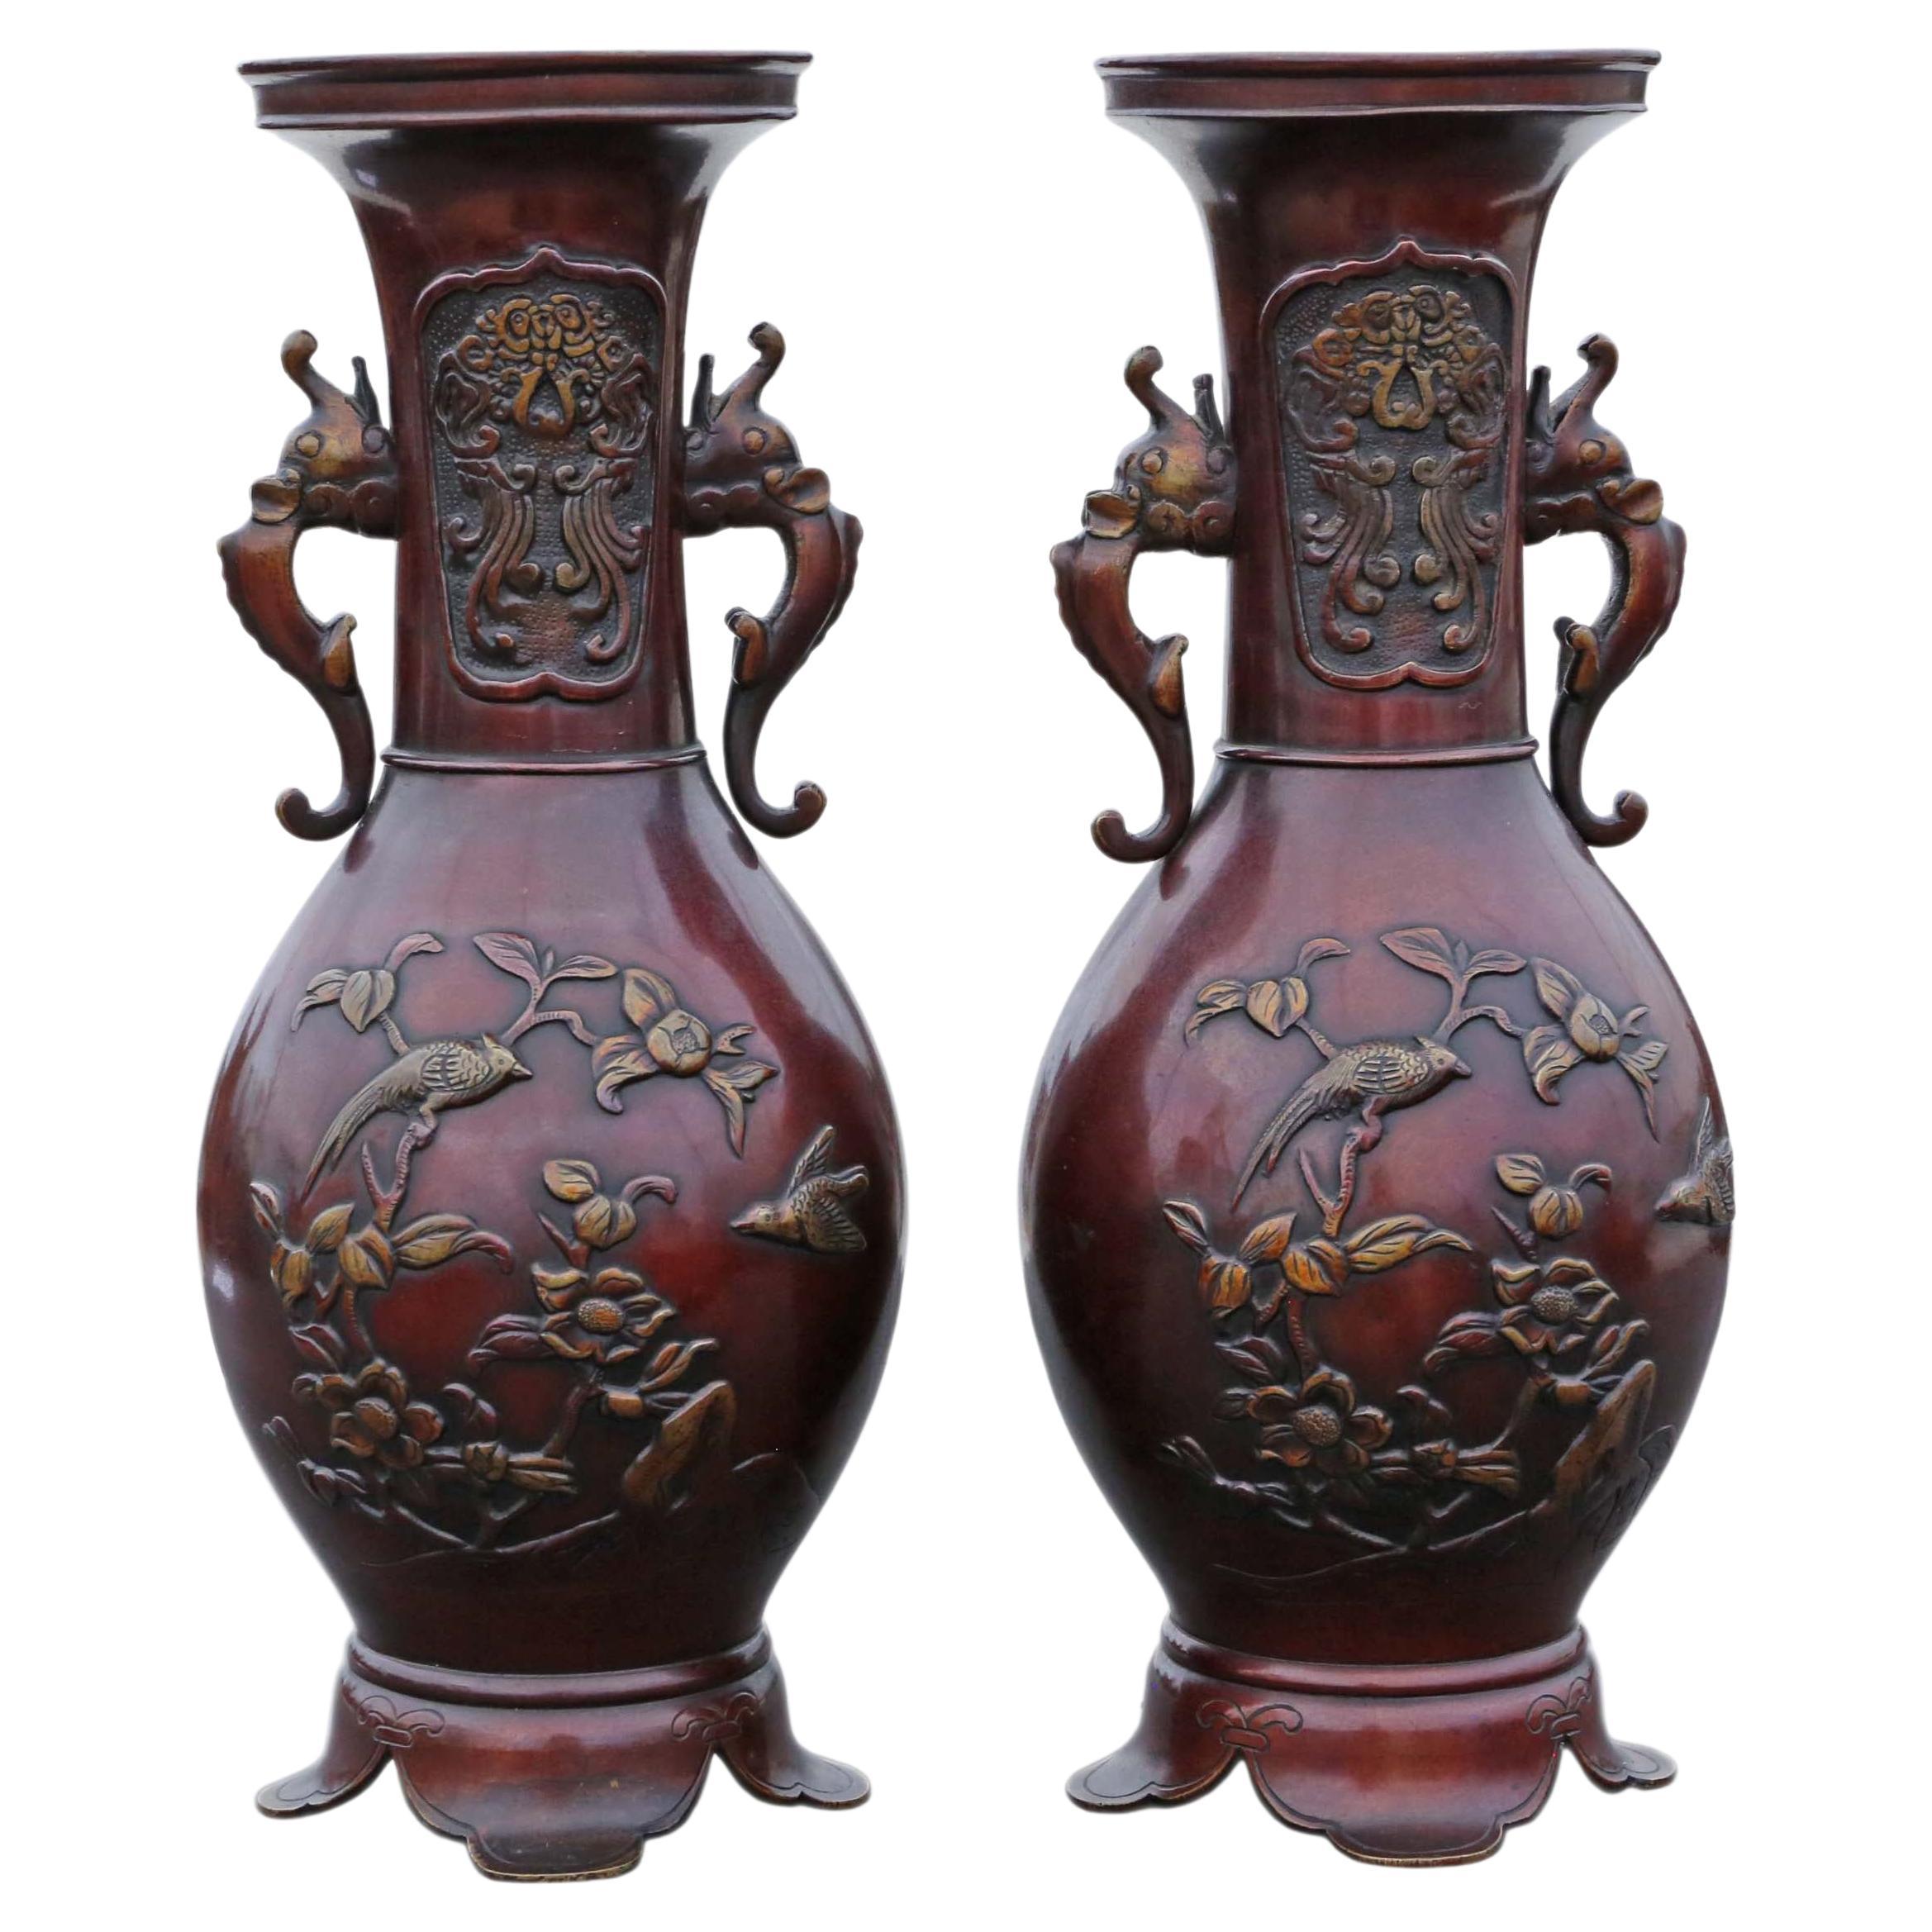 Antique Very Large Pair of Japanese Bronze Vases Meiji Period